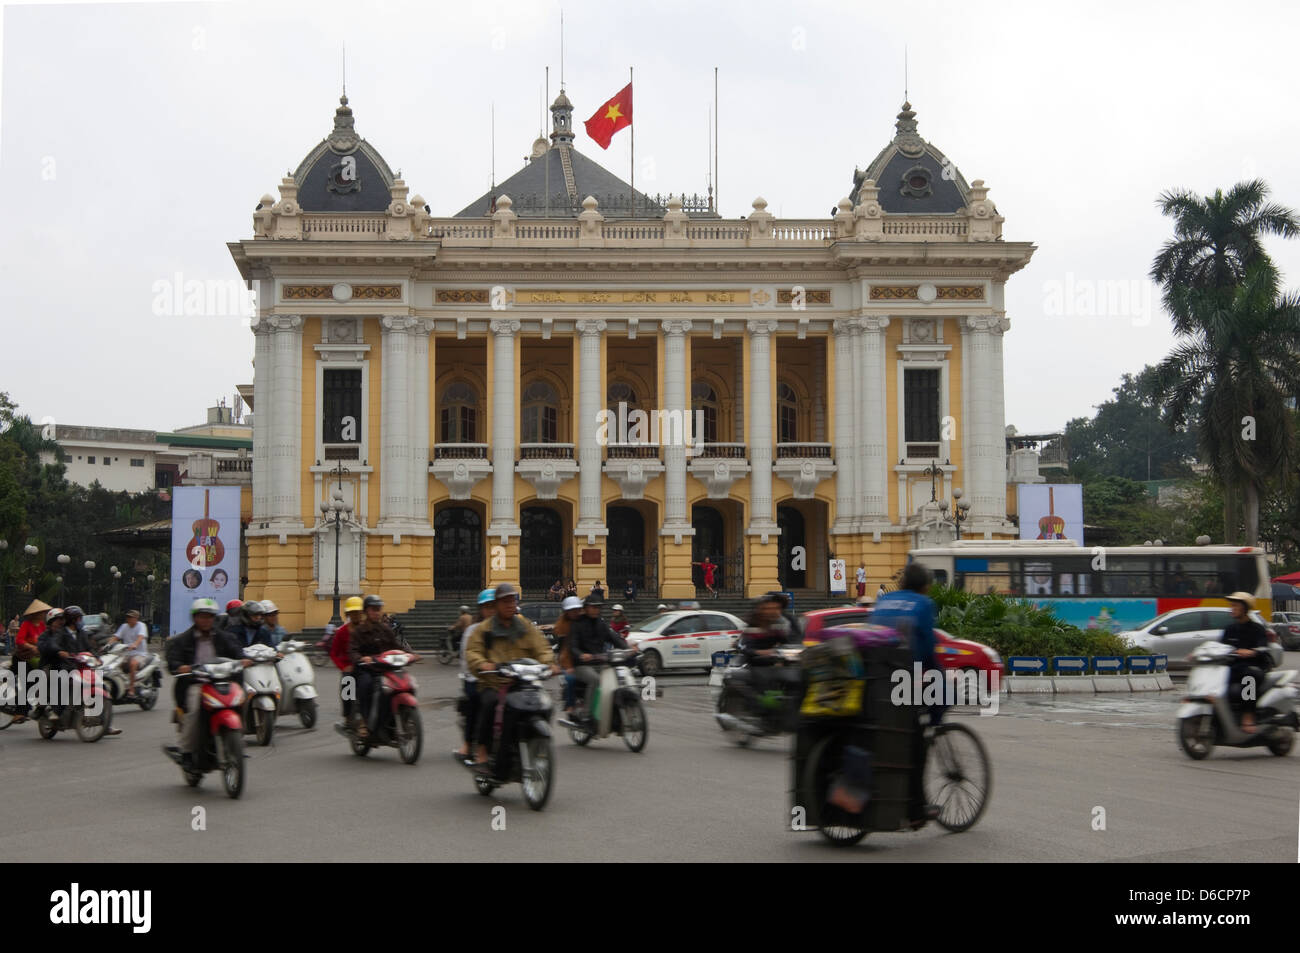 Horizontal wide angle of the Opera House, Nhà hát lớn Hà Nội, in central Hanoi. Stock Photo